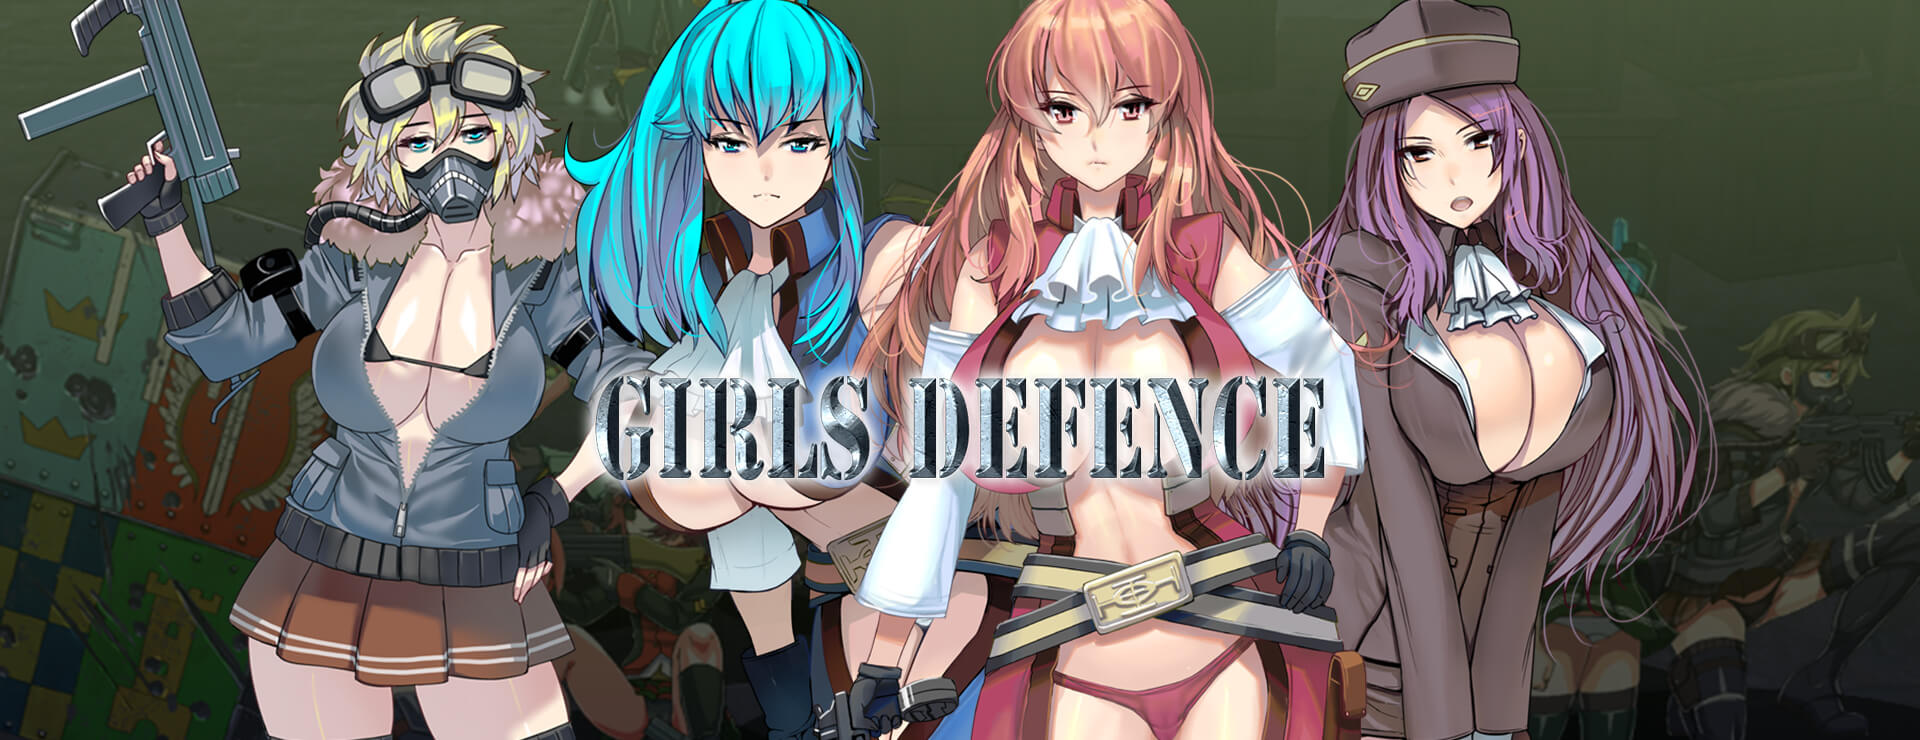 Girls Defence - 动作冒险游戏 遊戲